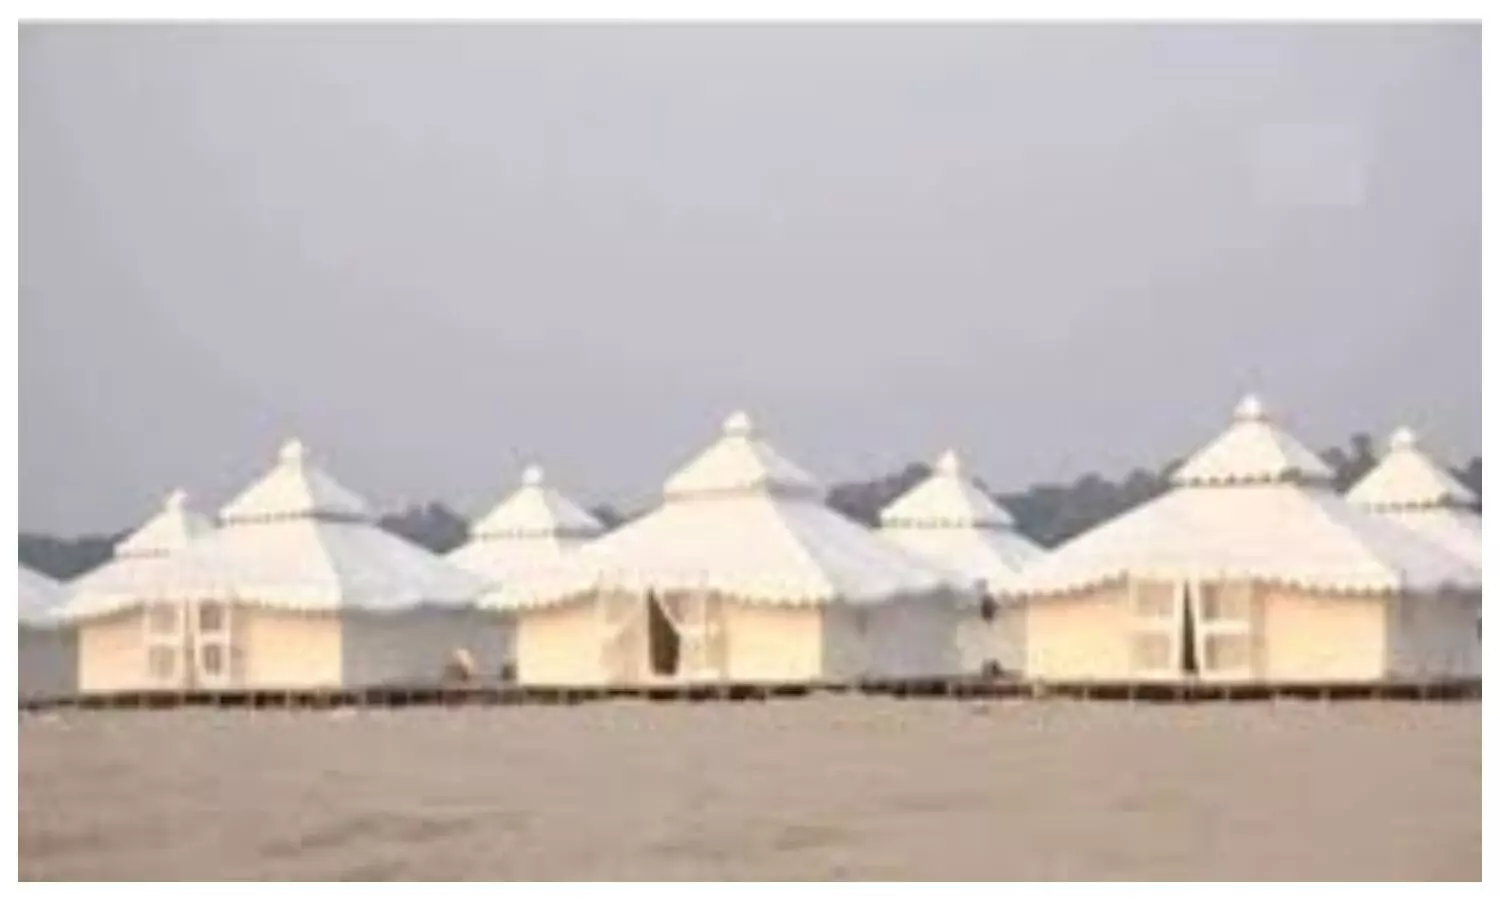 Luxury Tent City in Varanasi